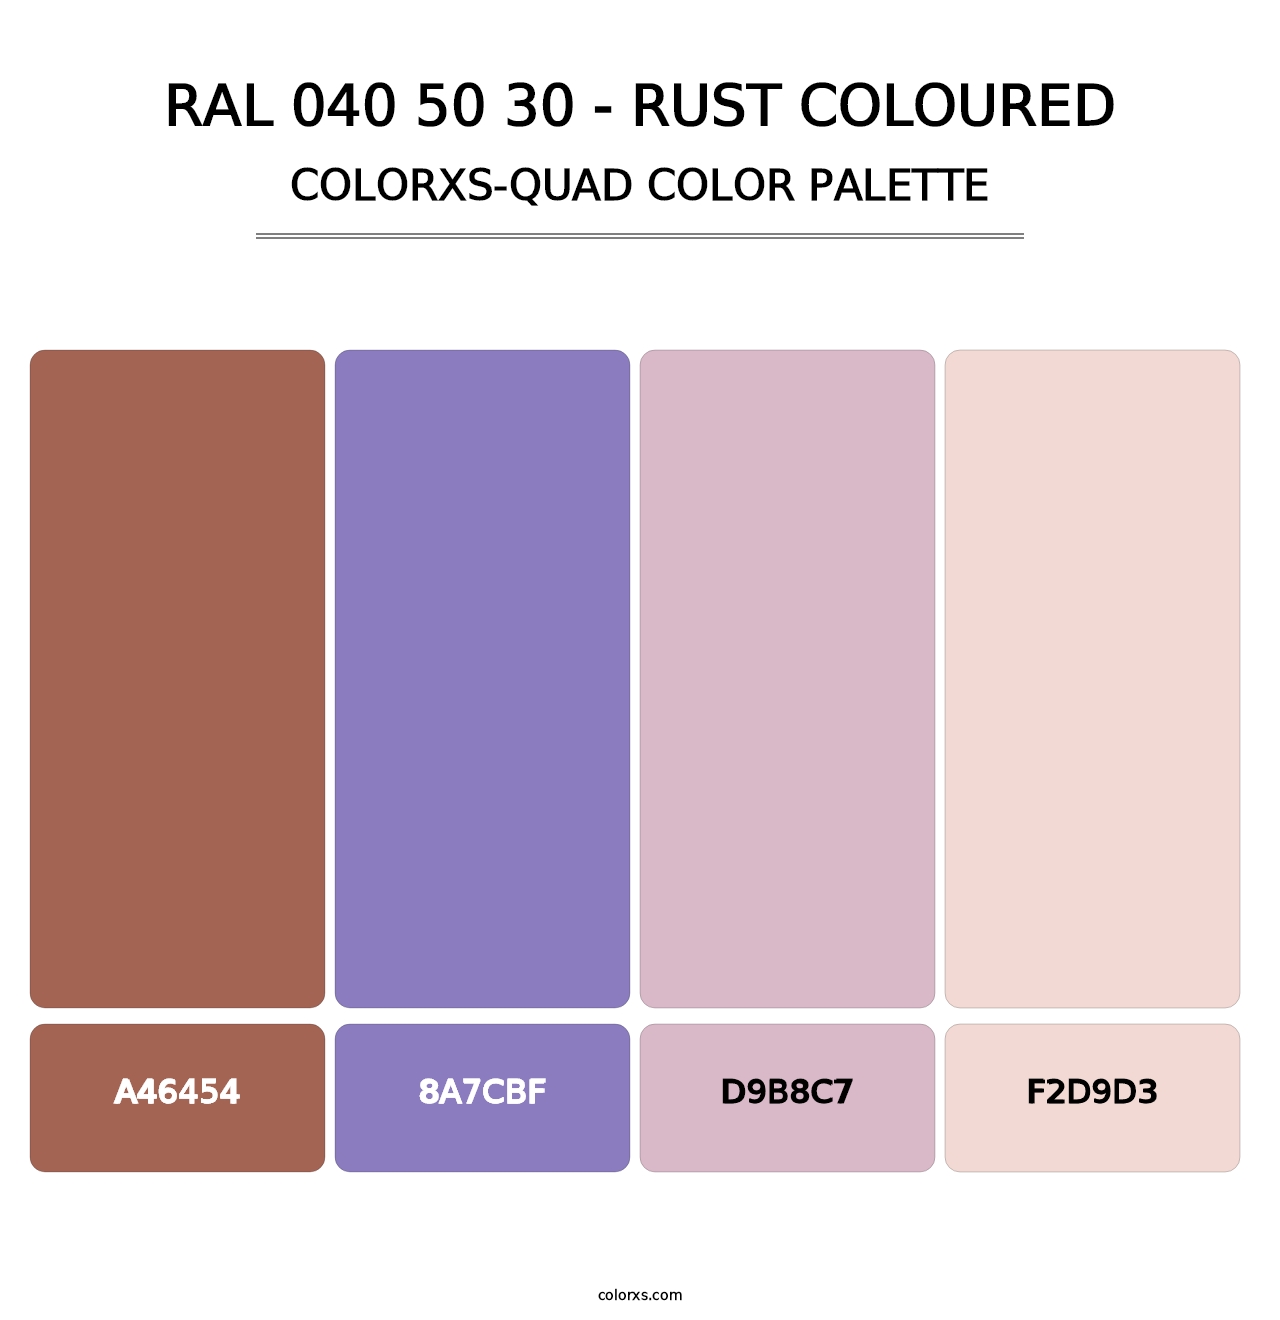 RAL 040 50 30 - Rust Coloured - Colorxs Quad Palette